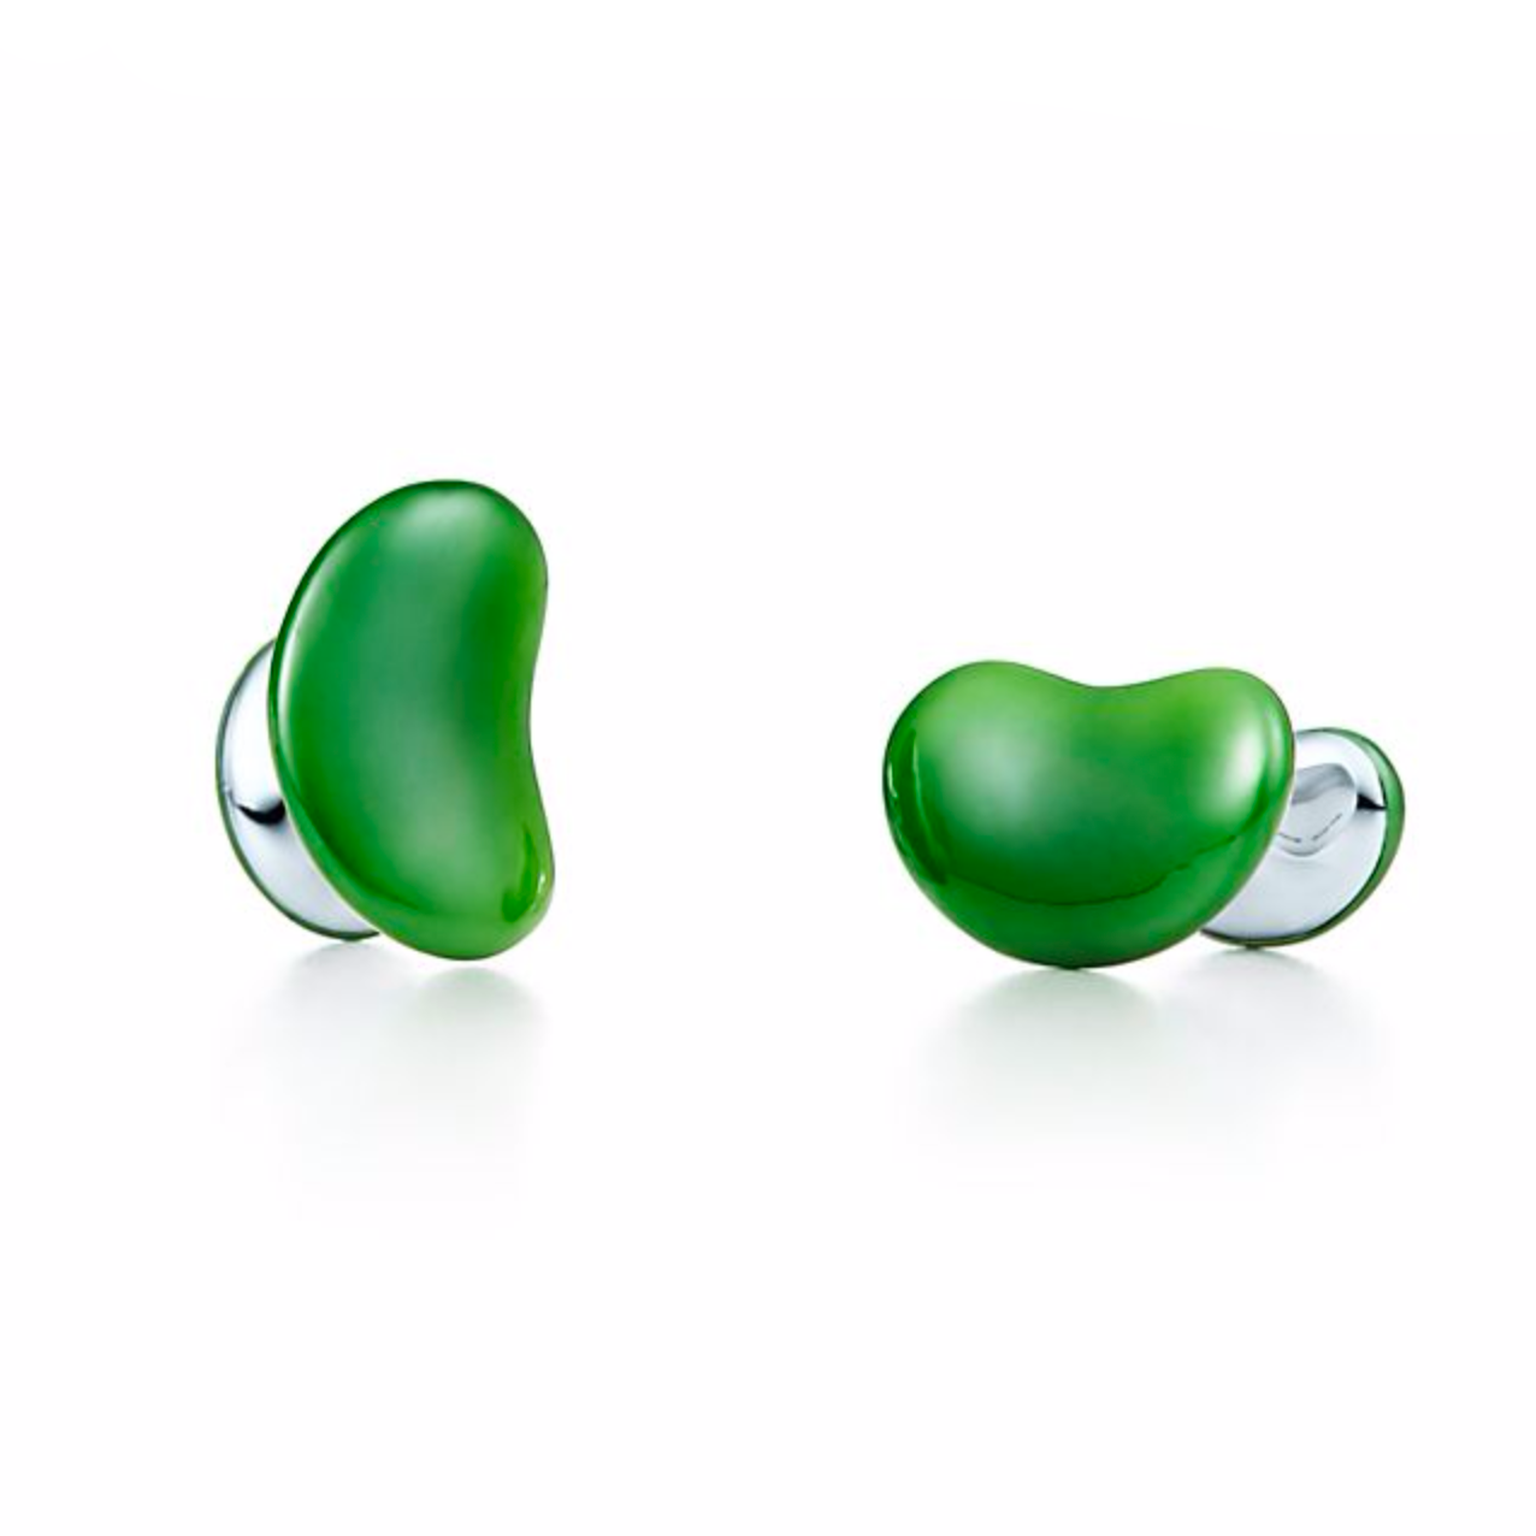 Tiffany & Co. Elsa Peretti Bean cufflinks in jade